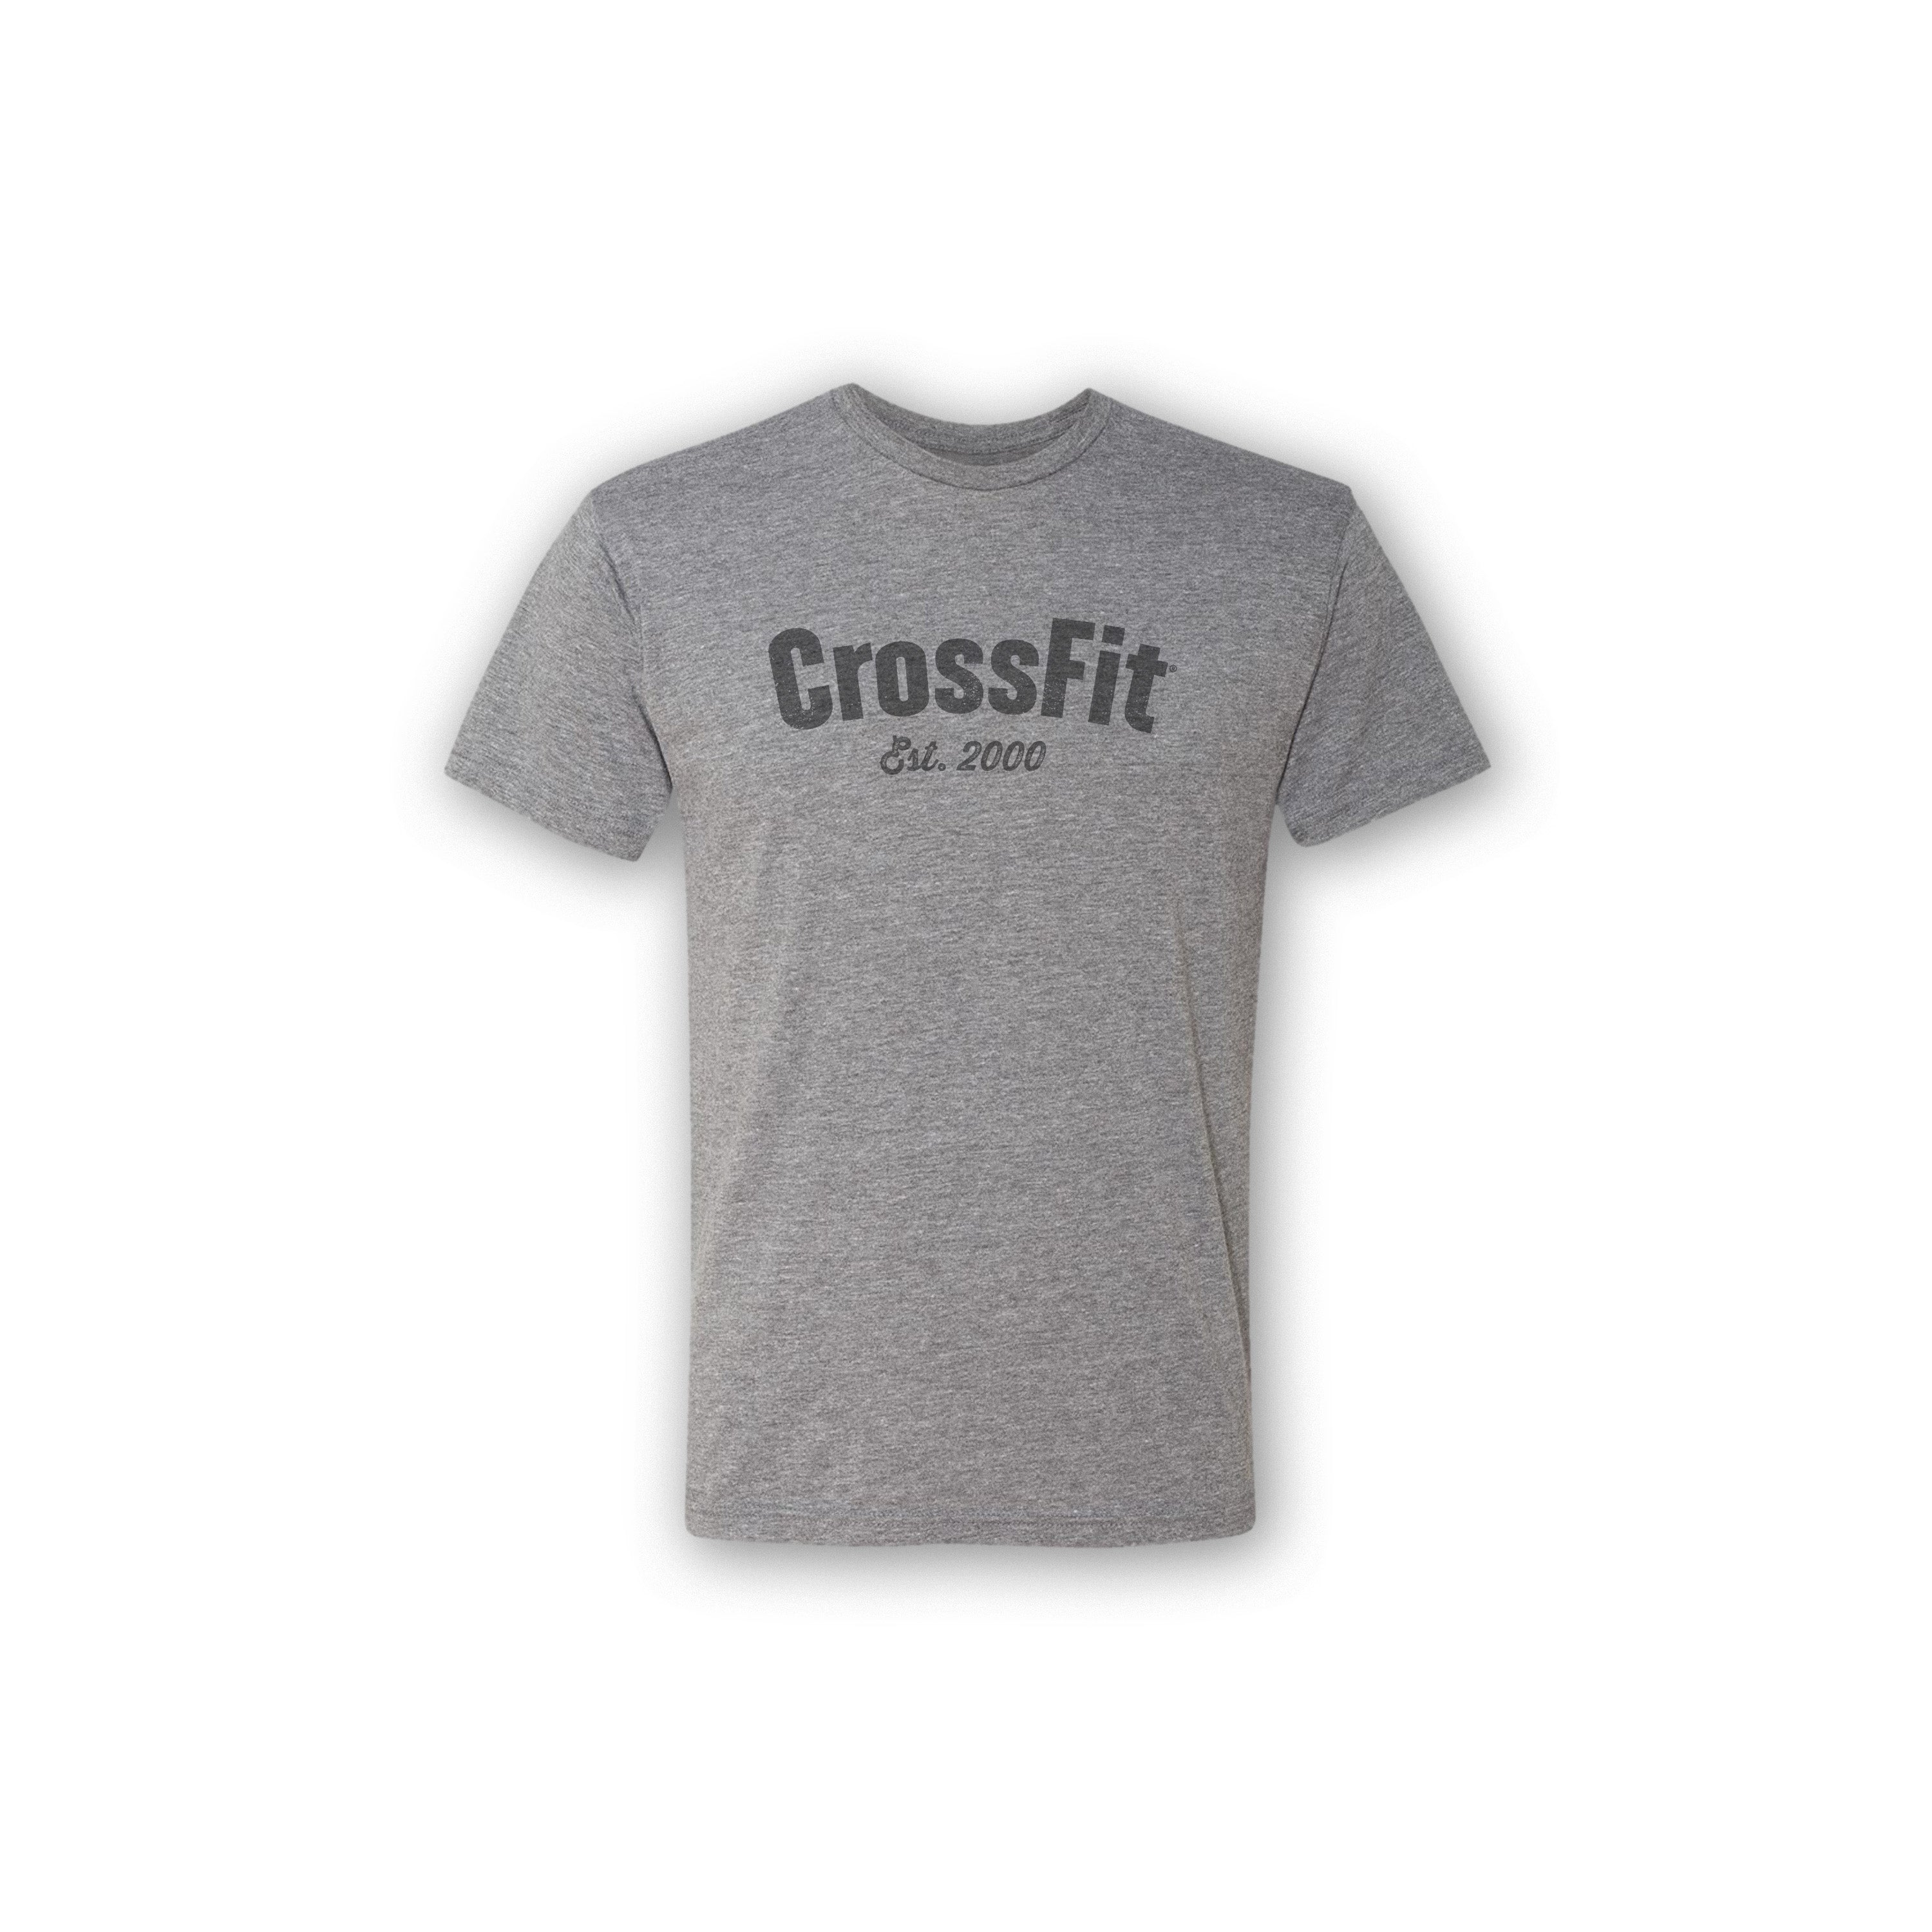 CrossFit Est.2000 T-Shirt - Heather Grey